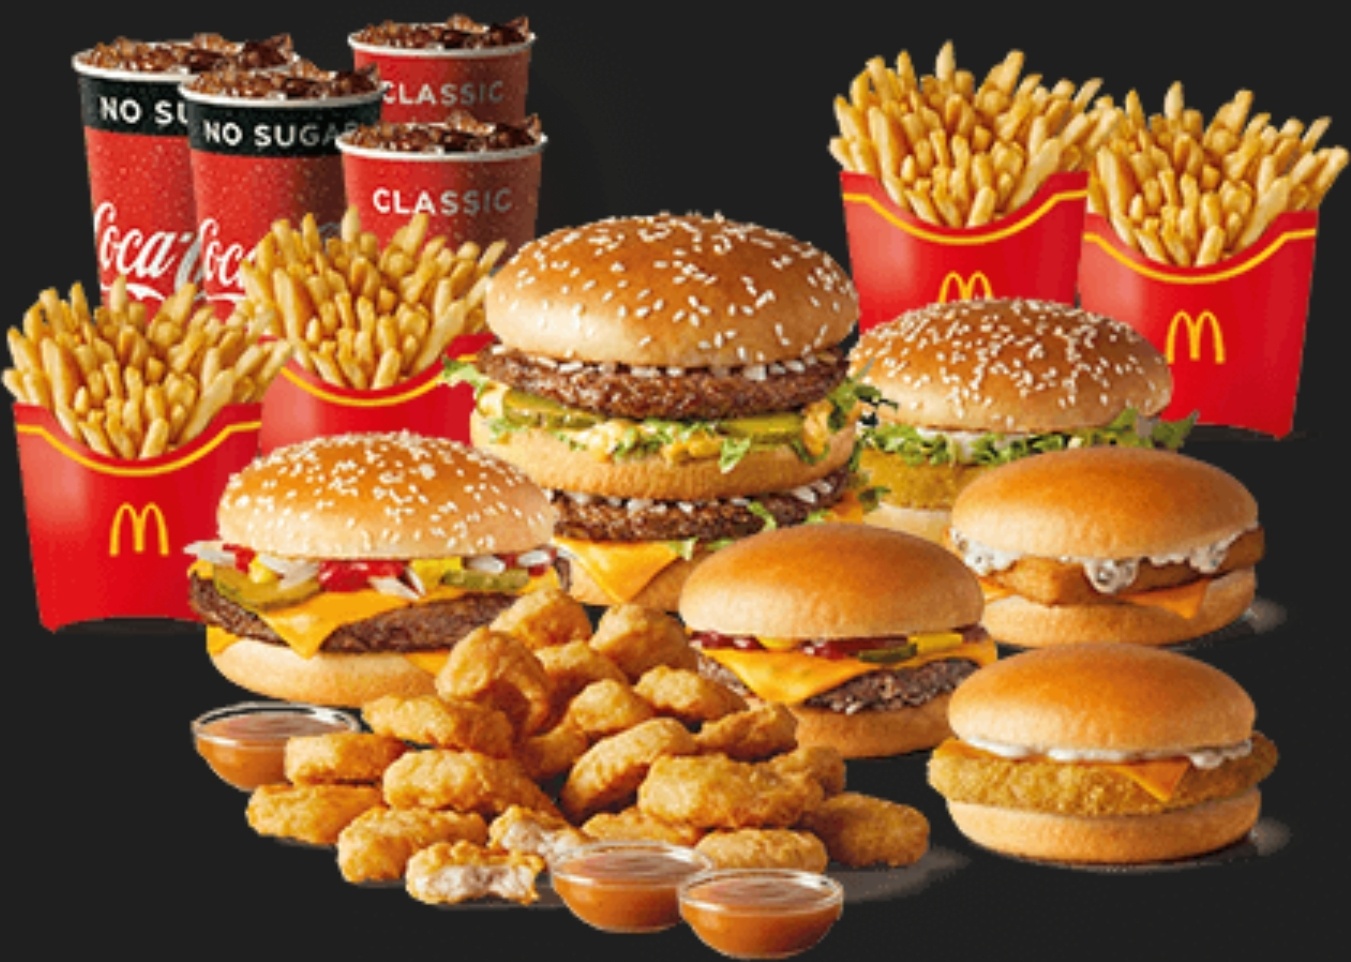 DEAL: McDonald’s $57.95 McFamily Box via Uber Eats, DoorDash, Deliveroo & Menulog (4 Large Burgers, 2 Small Burgers, 4 Medium Fries, 20 Nuggets, 4 Soft Drinks) 7